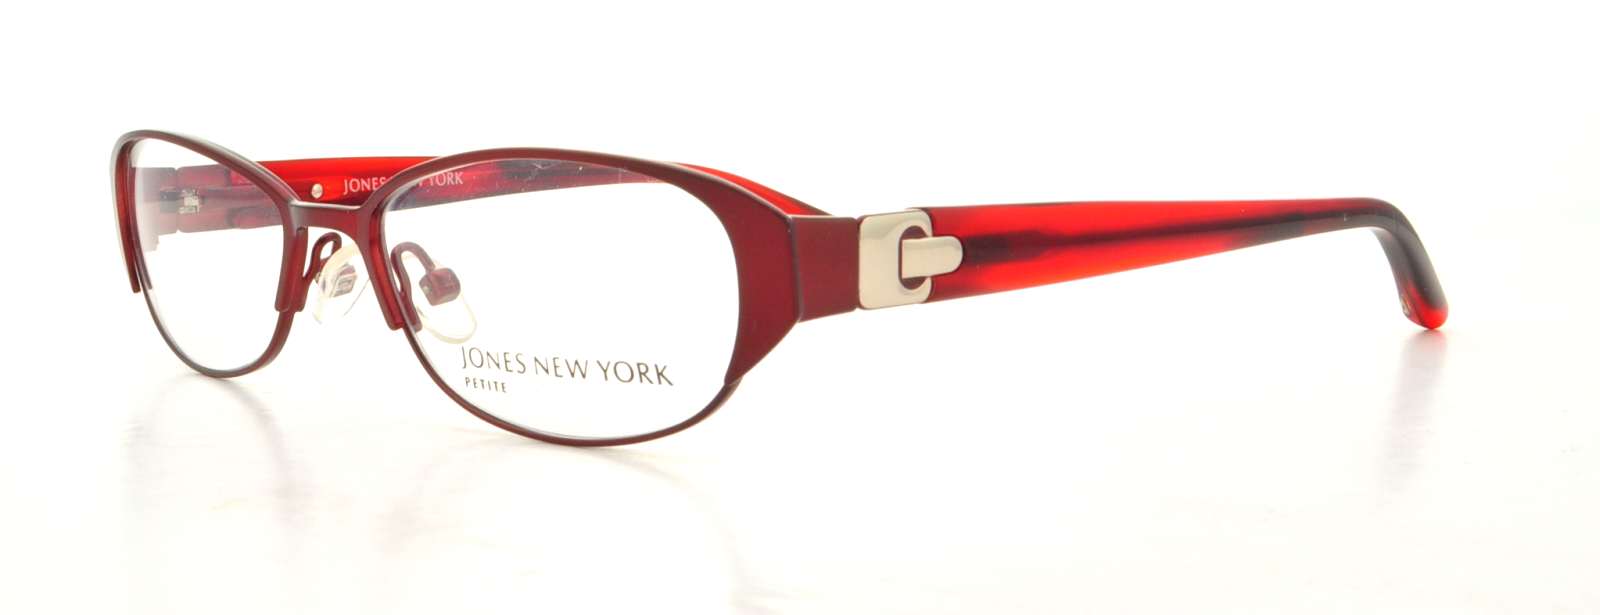 Picture of Jones New York Eyeglasses J135